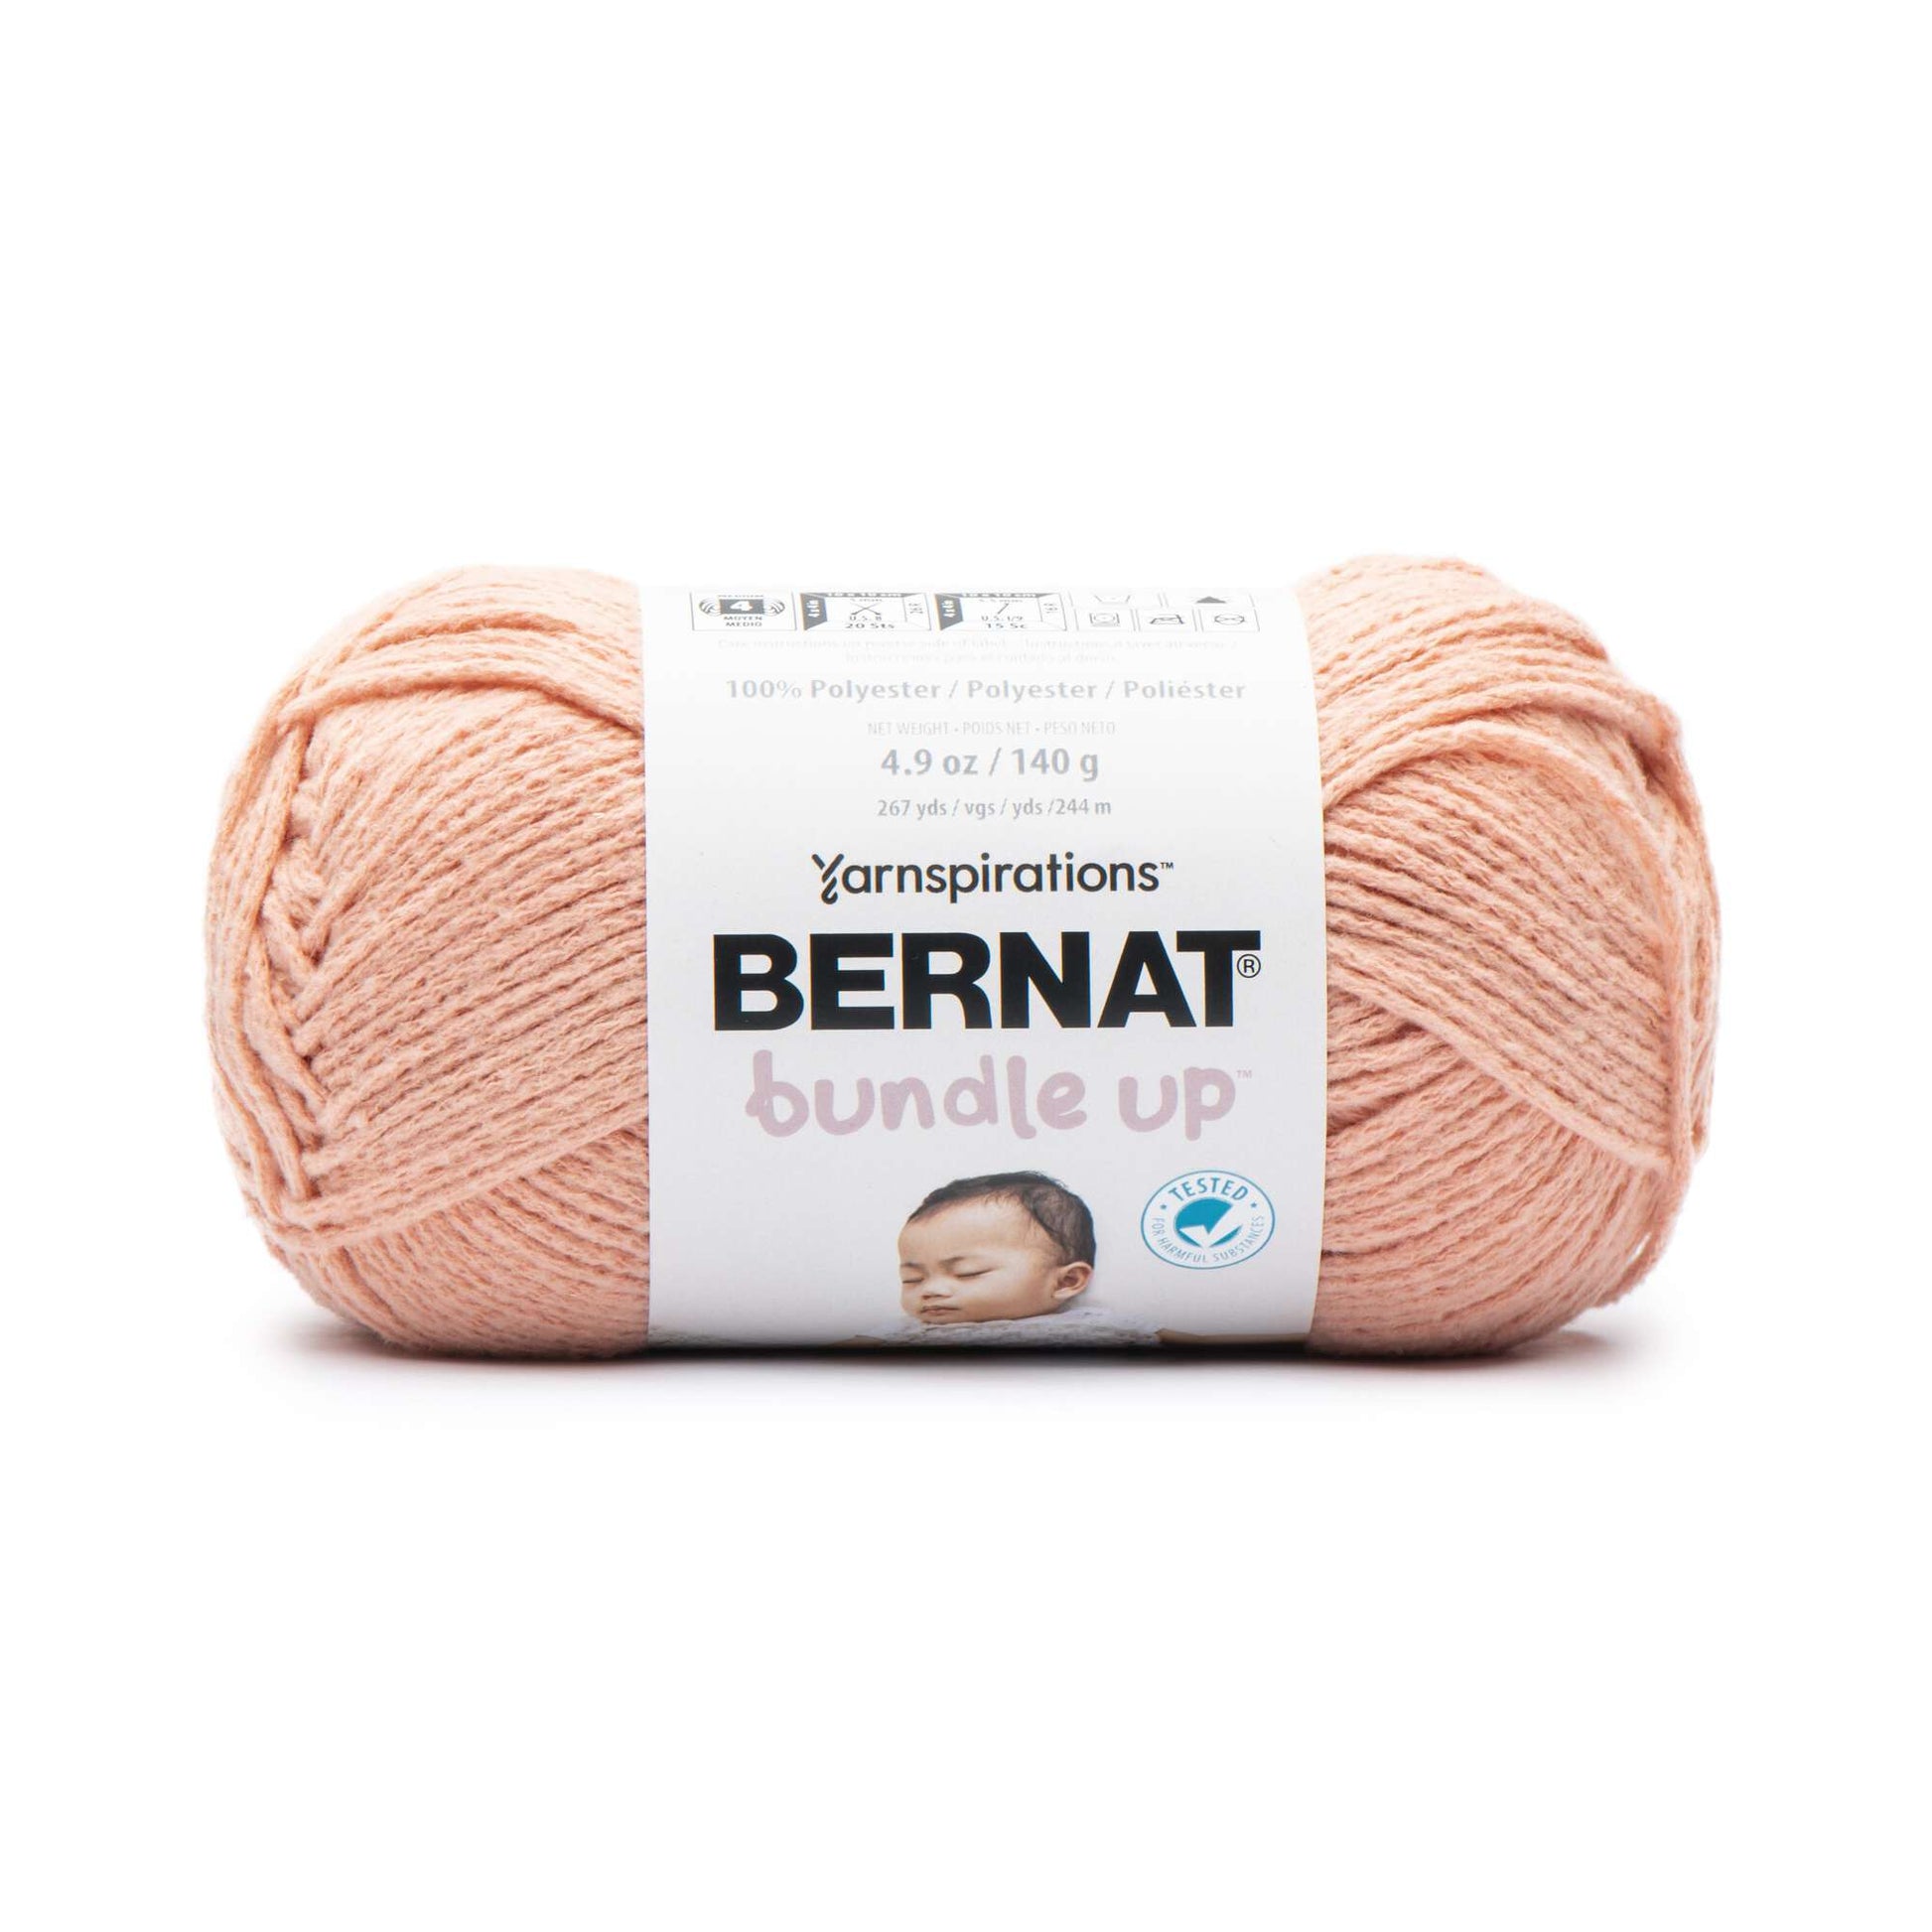 Bernat Bundle Up Yarn  Big balls, Ball, Misty grey